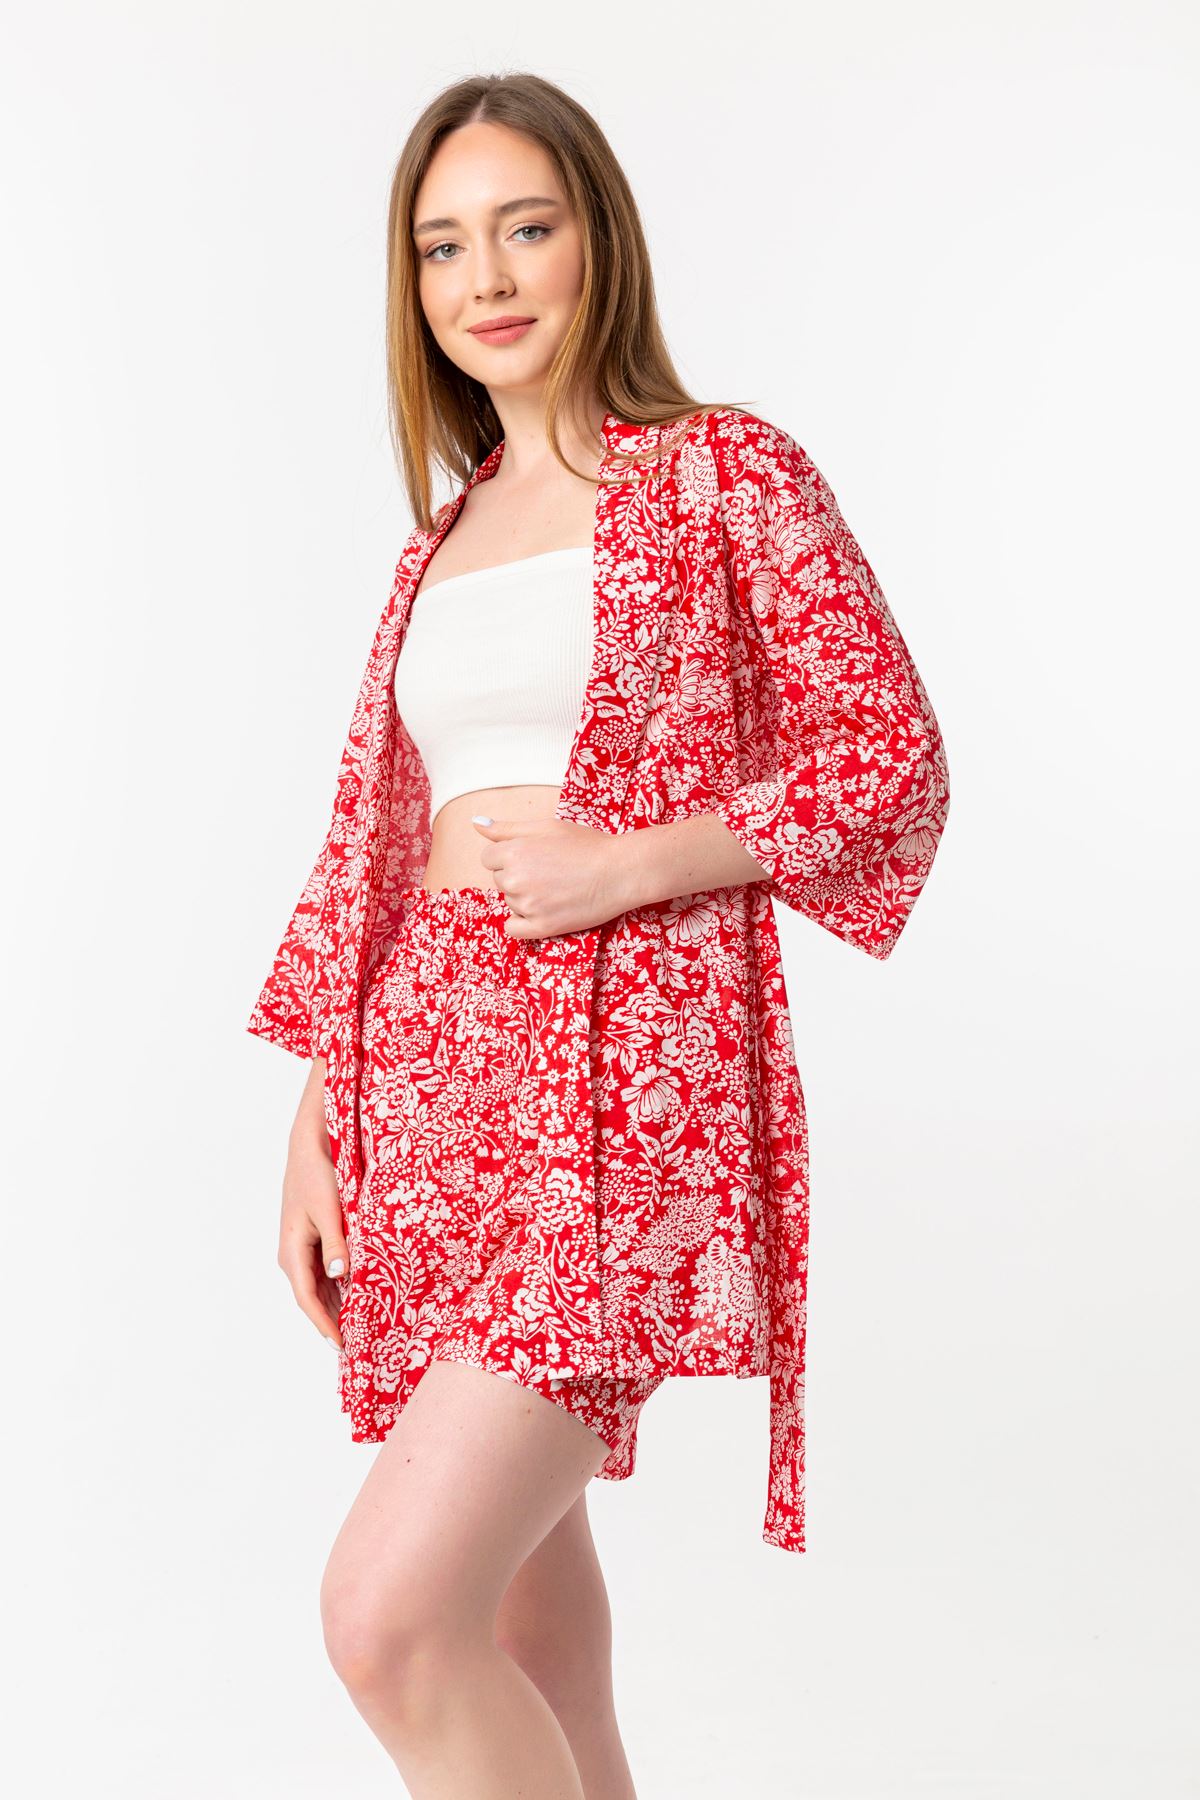 Vual Fabric Shawl Collar Floral Print Kimono Women'S Set - Red